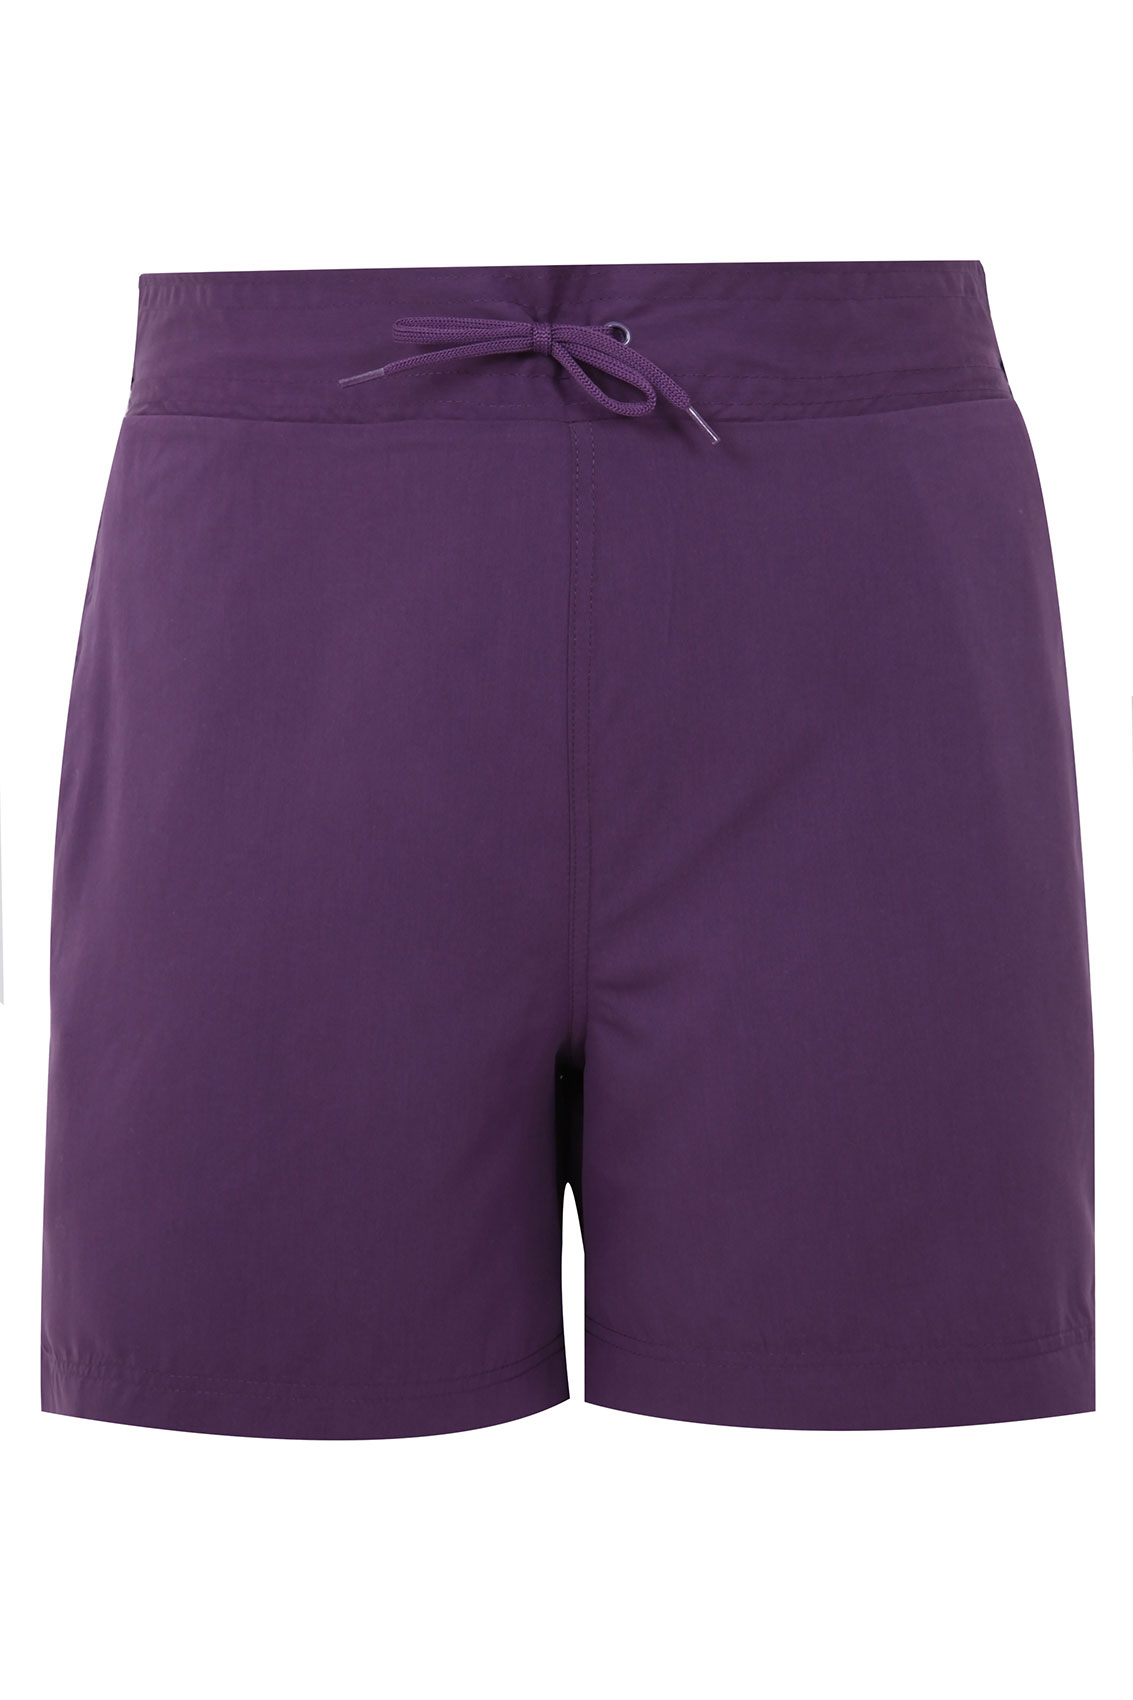 Purple Board Shorts With Drawstring Waist Plus Size Plus Sizes 161820222426283032